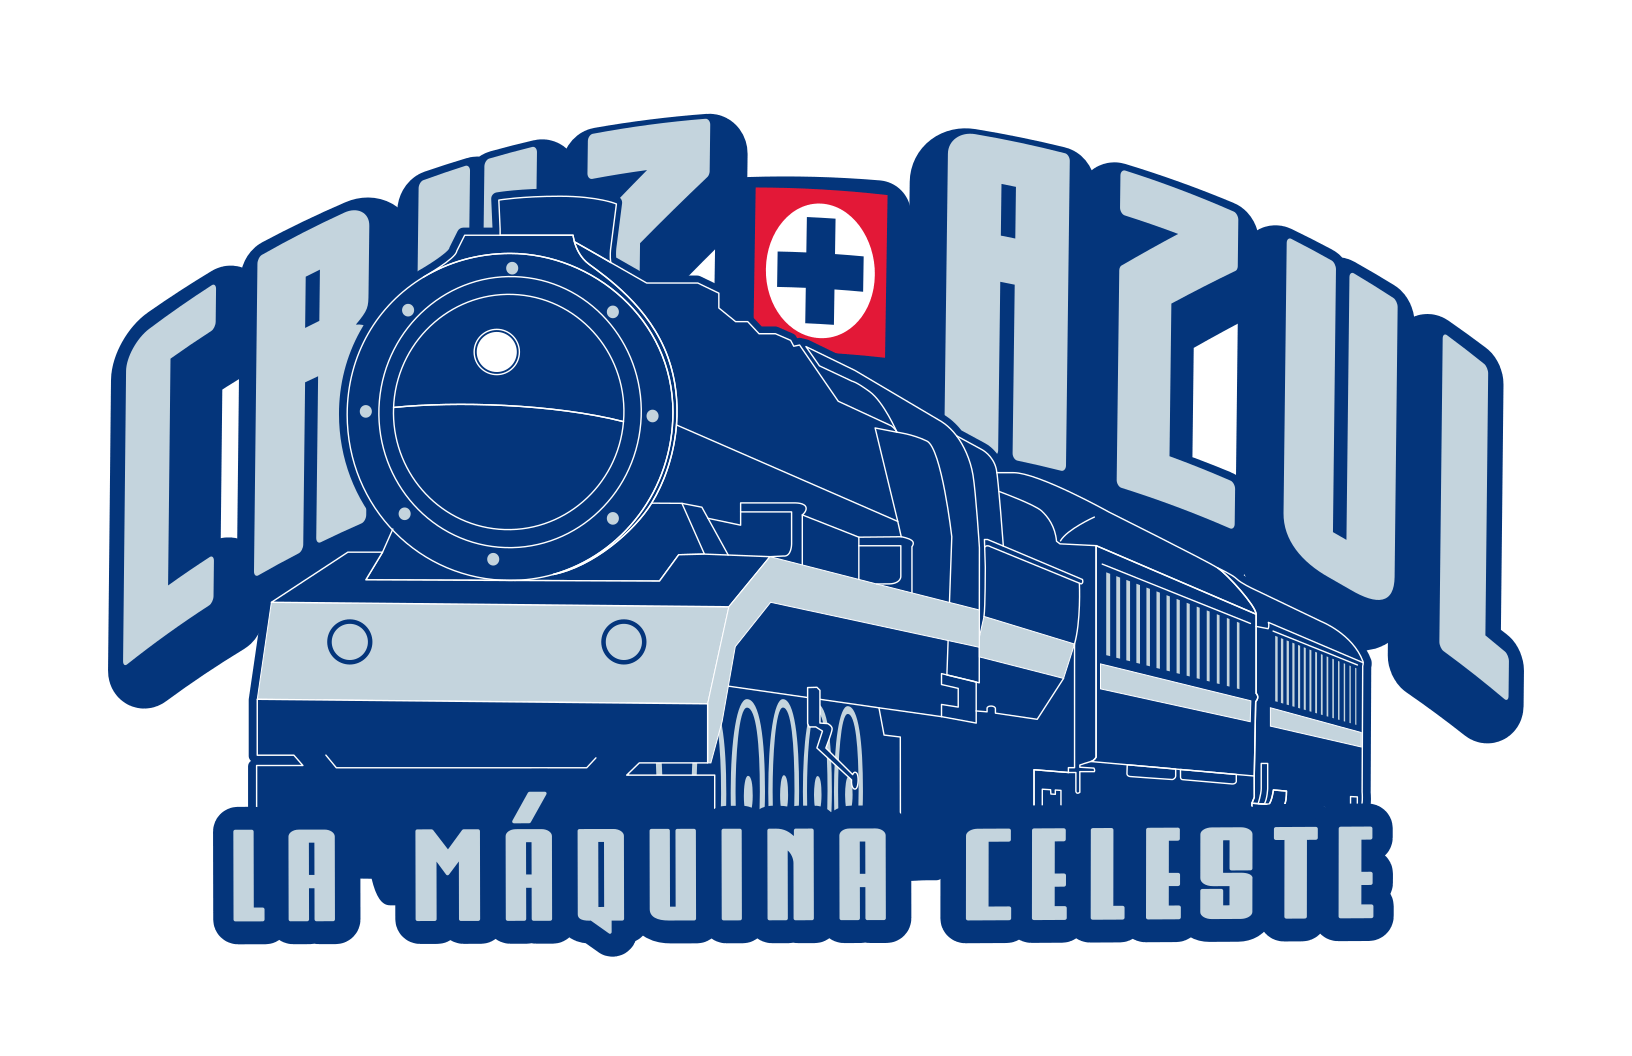 Cruz Azul Logo Wallpapers 4k, HD Cruz Azul Logo Backgrounds on